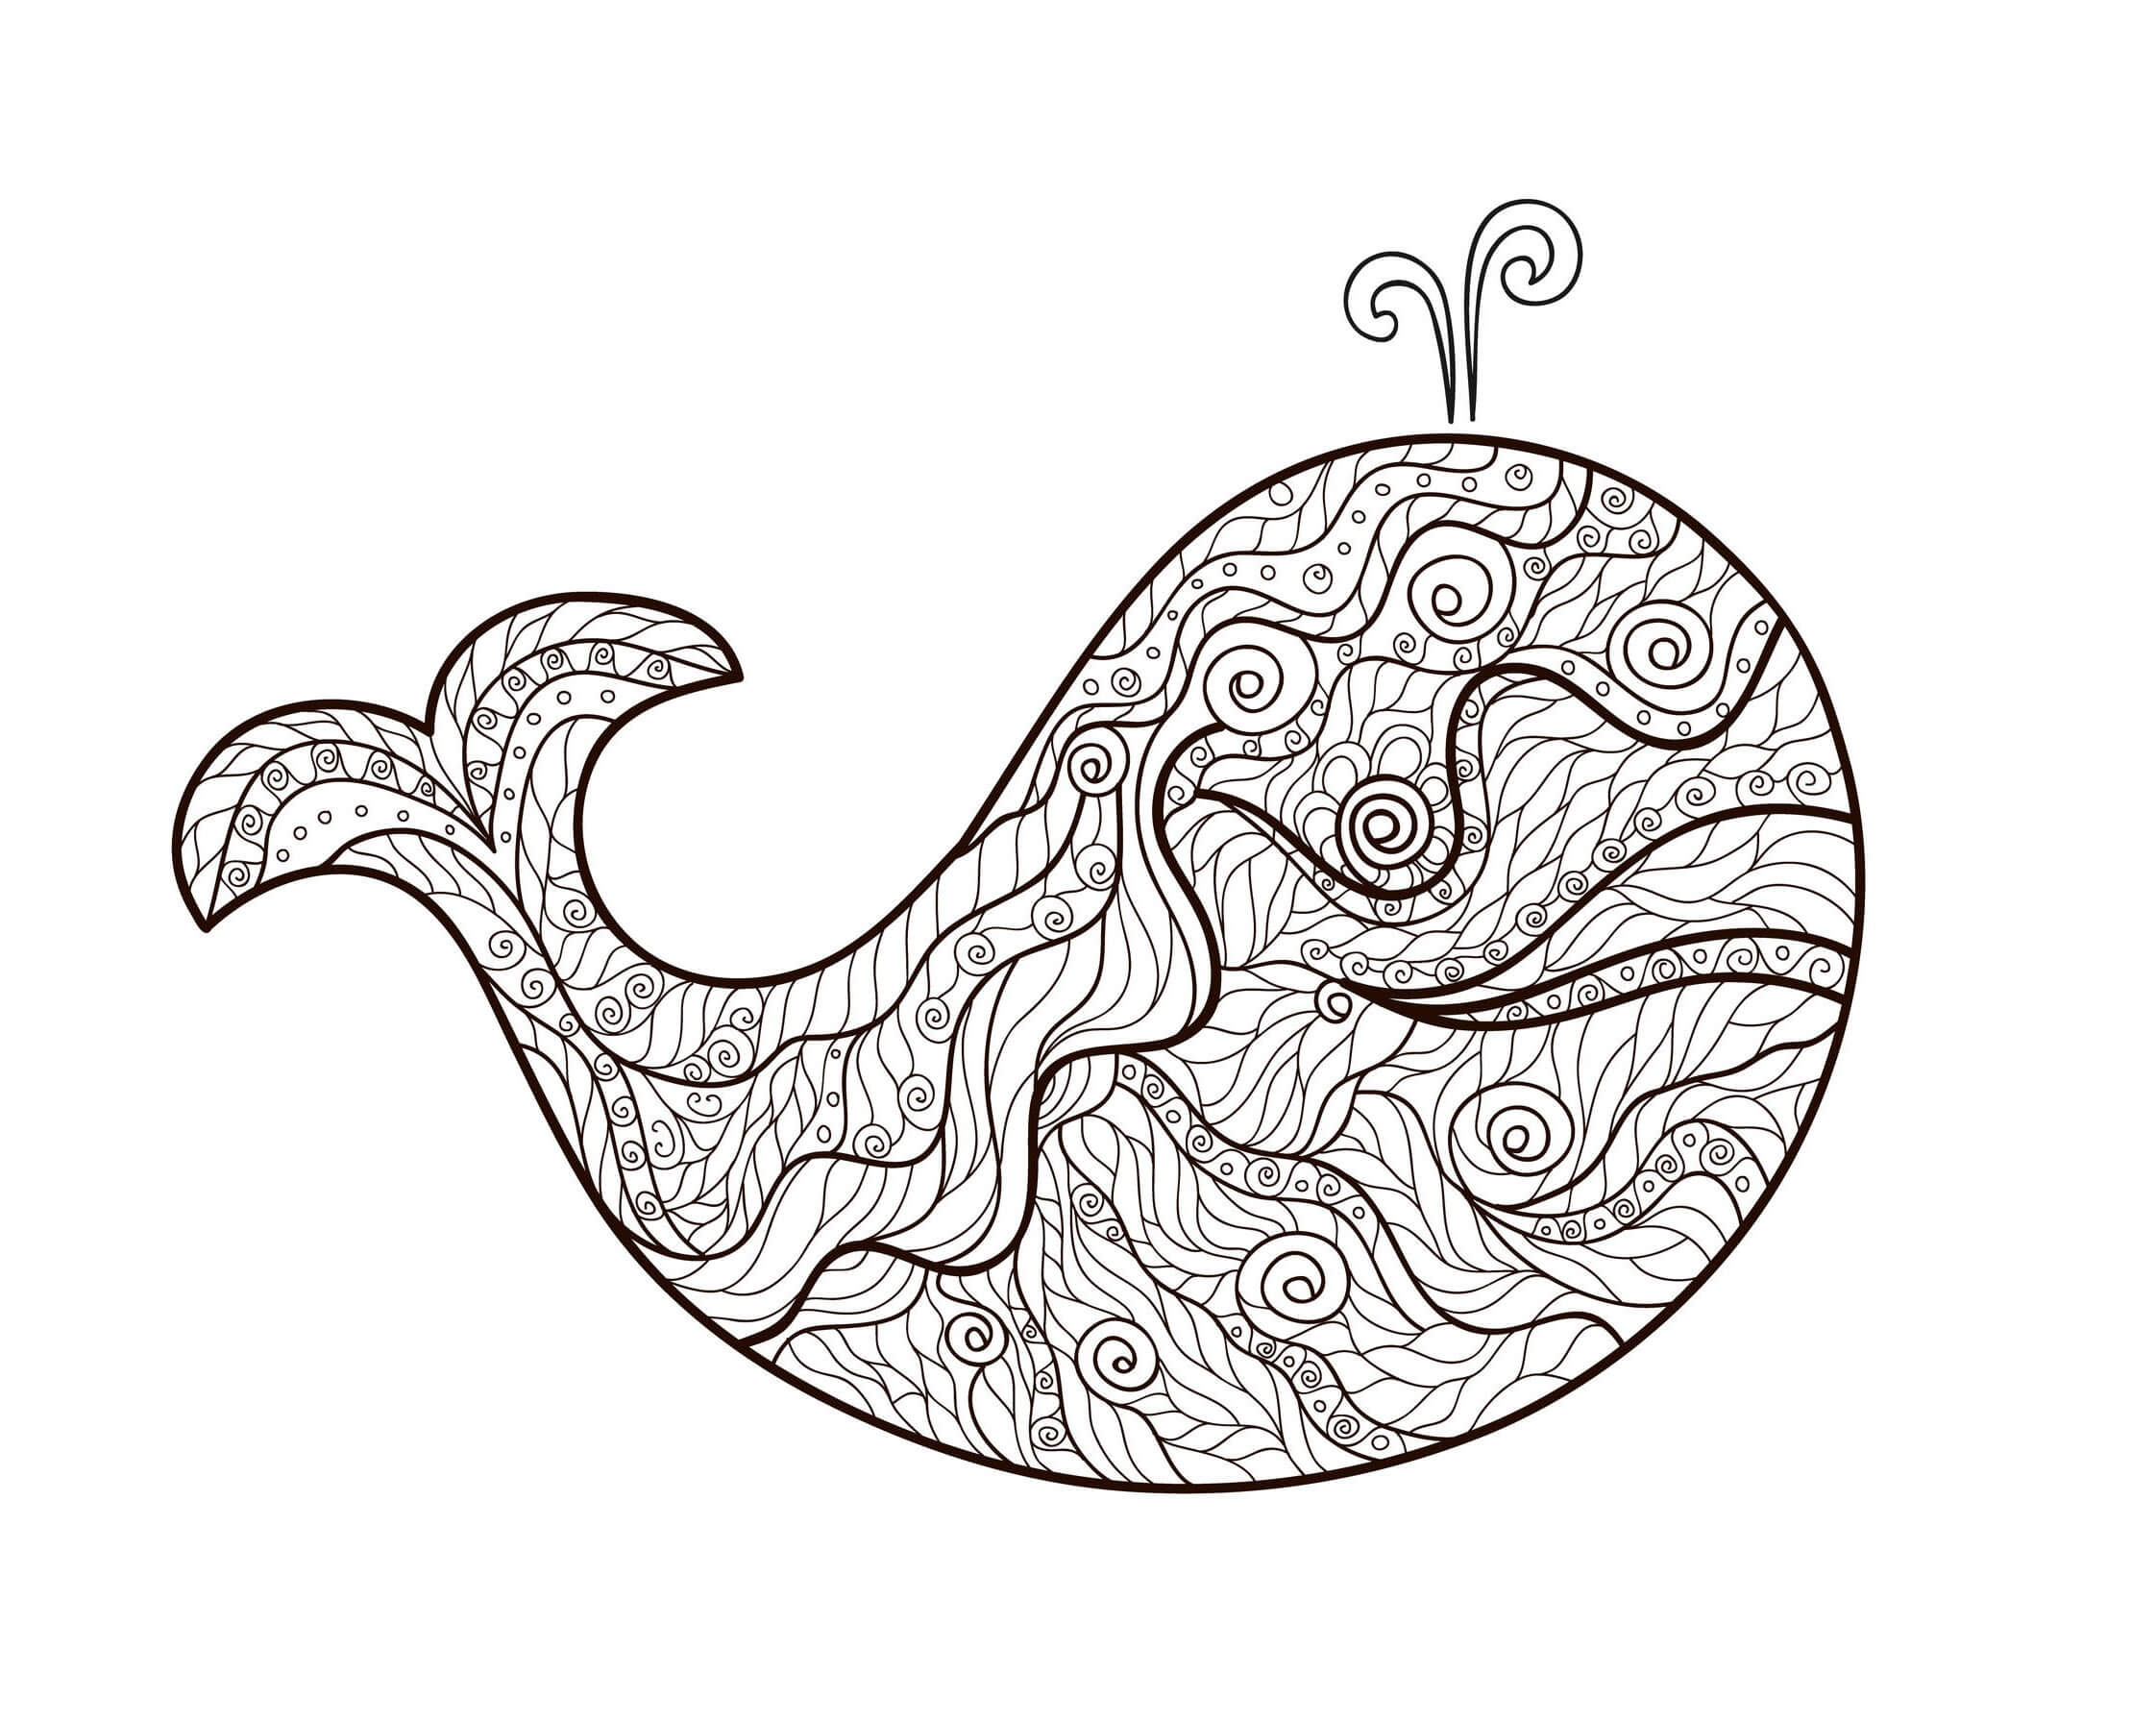 Mandala Whale Coloring Page - Sheet 6 Mandalas